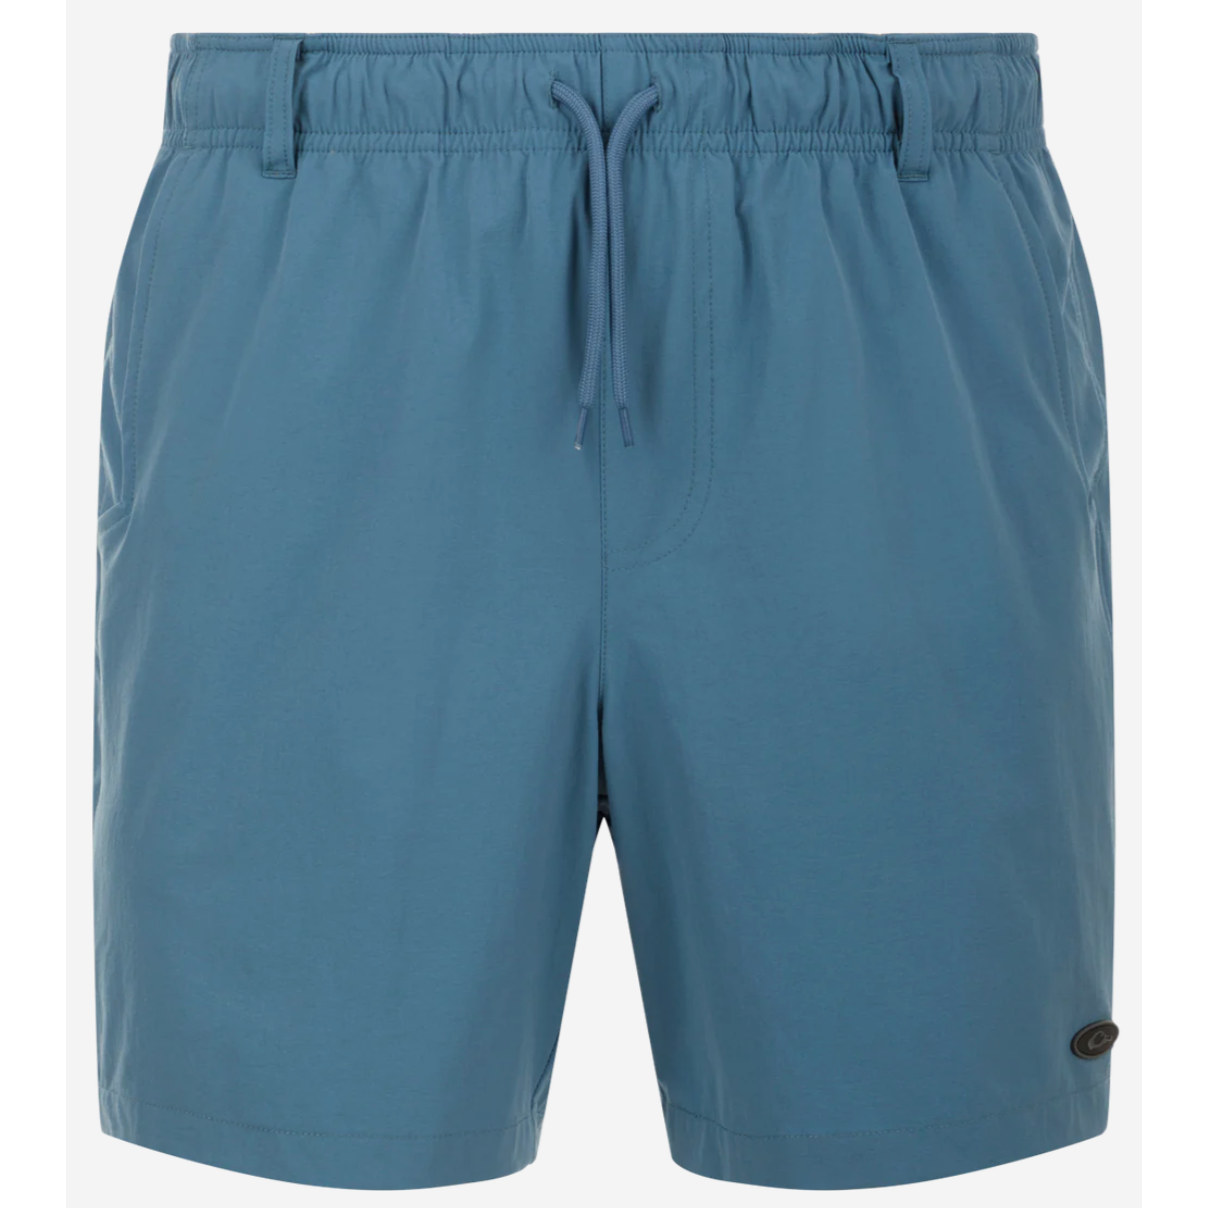 Drake Dock Shorts 6 in, Mens, Coronet Blue, Large